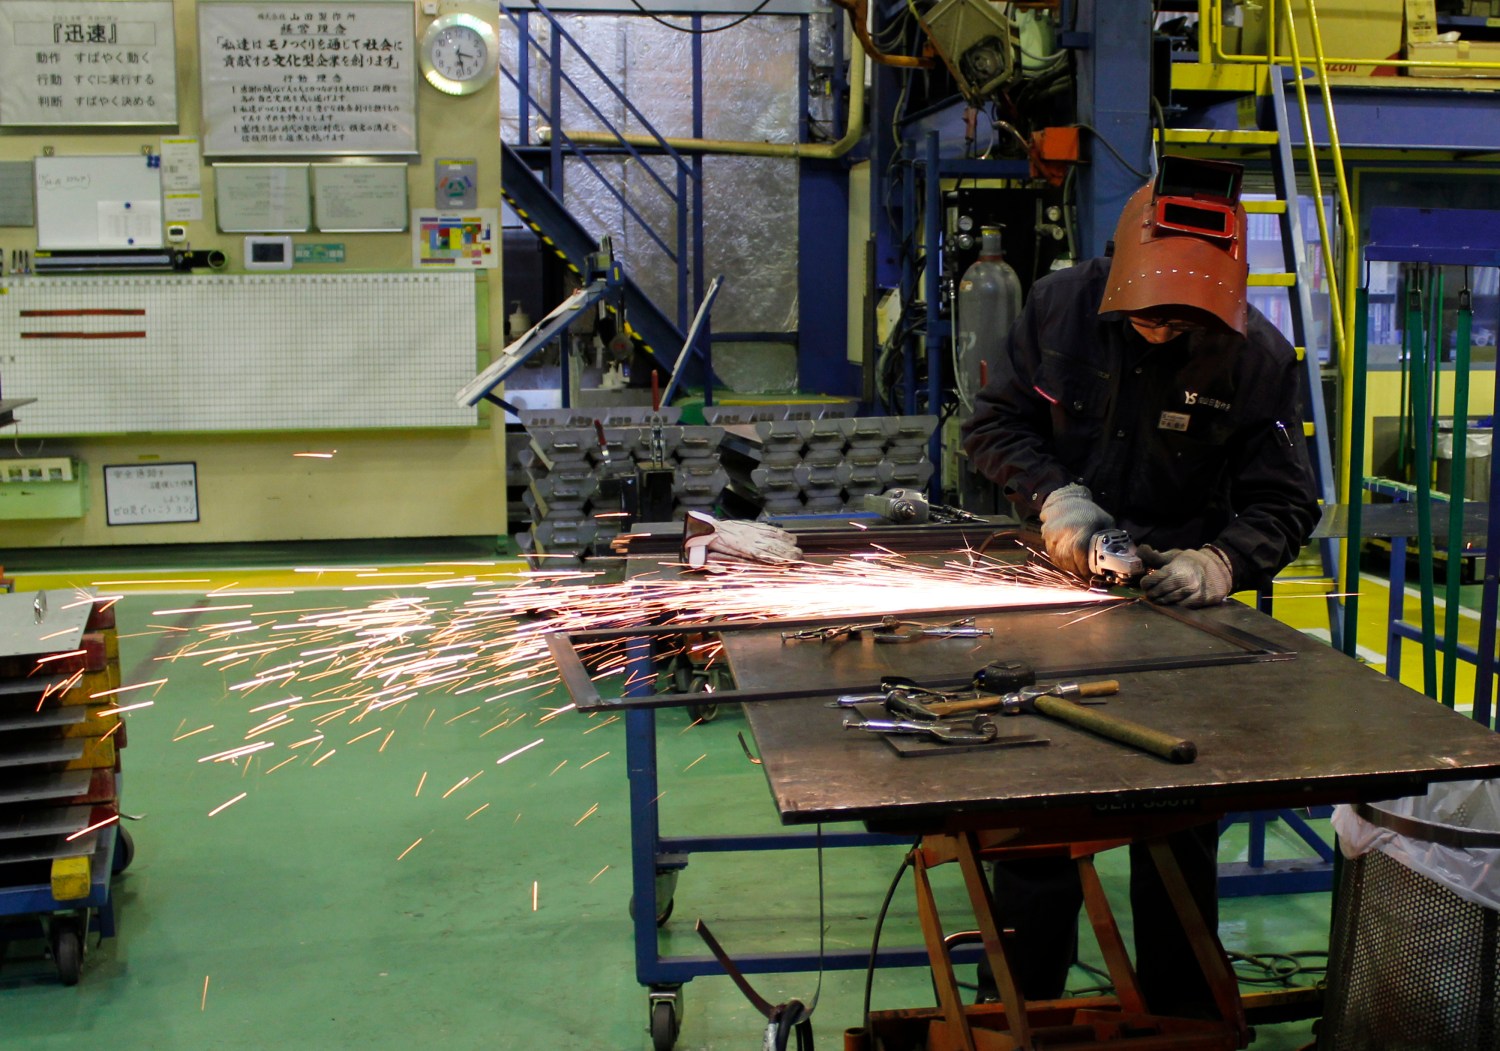 A worker cuts a metal at a sheet metal processing company.